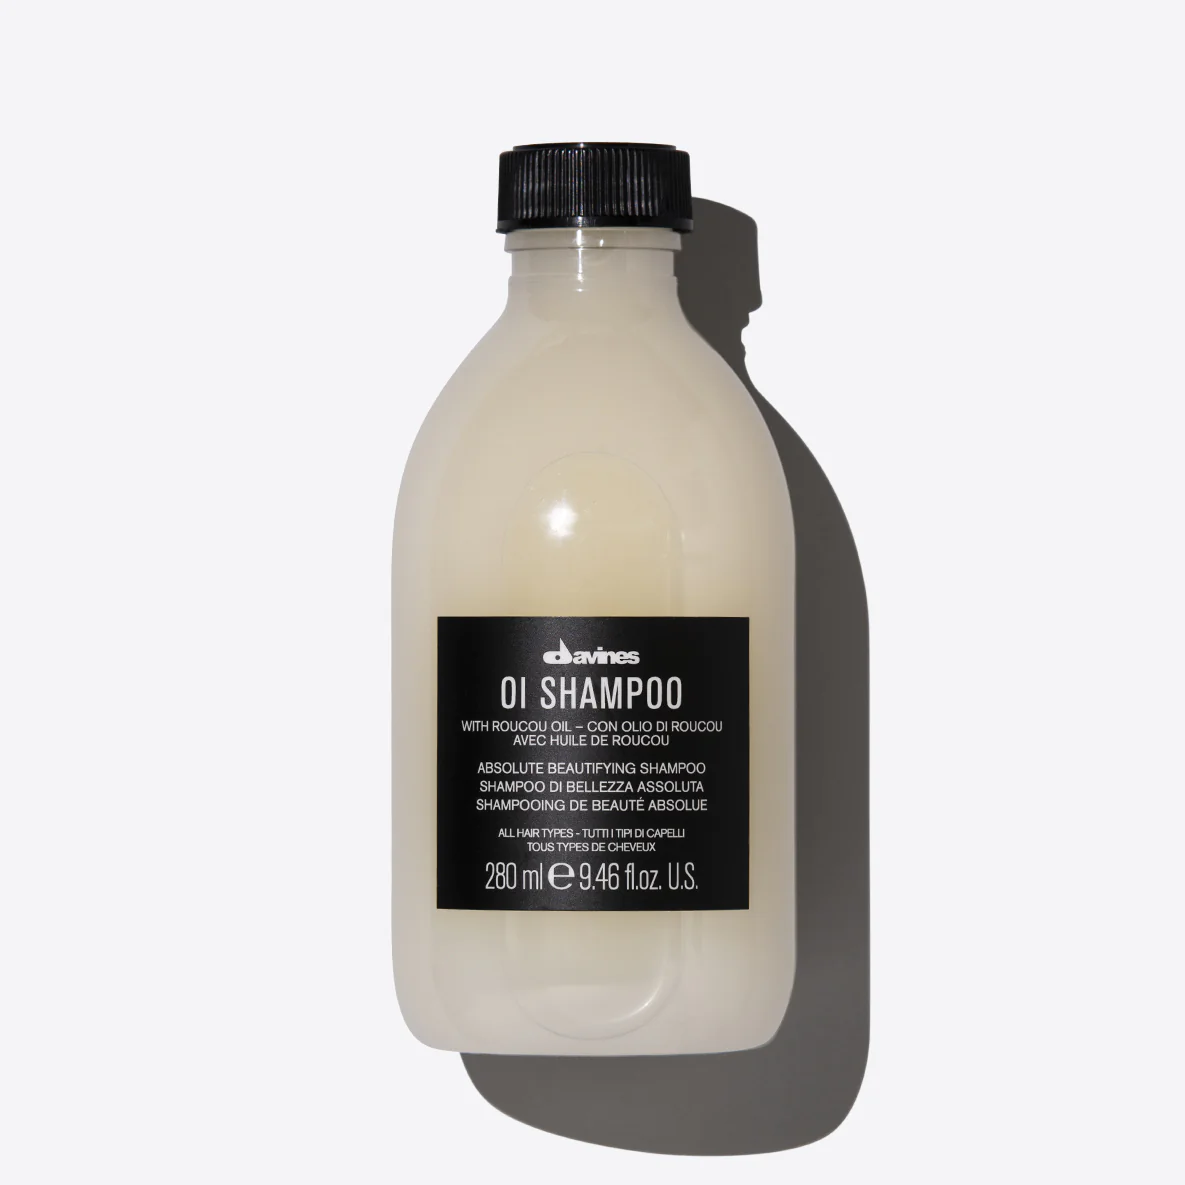 Davines OI Shampoo - Шампунь для абсолютной красоты волос, 280мл - фото 1